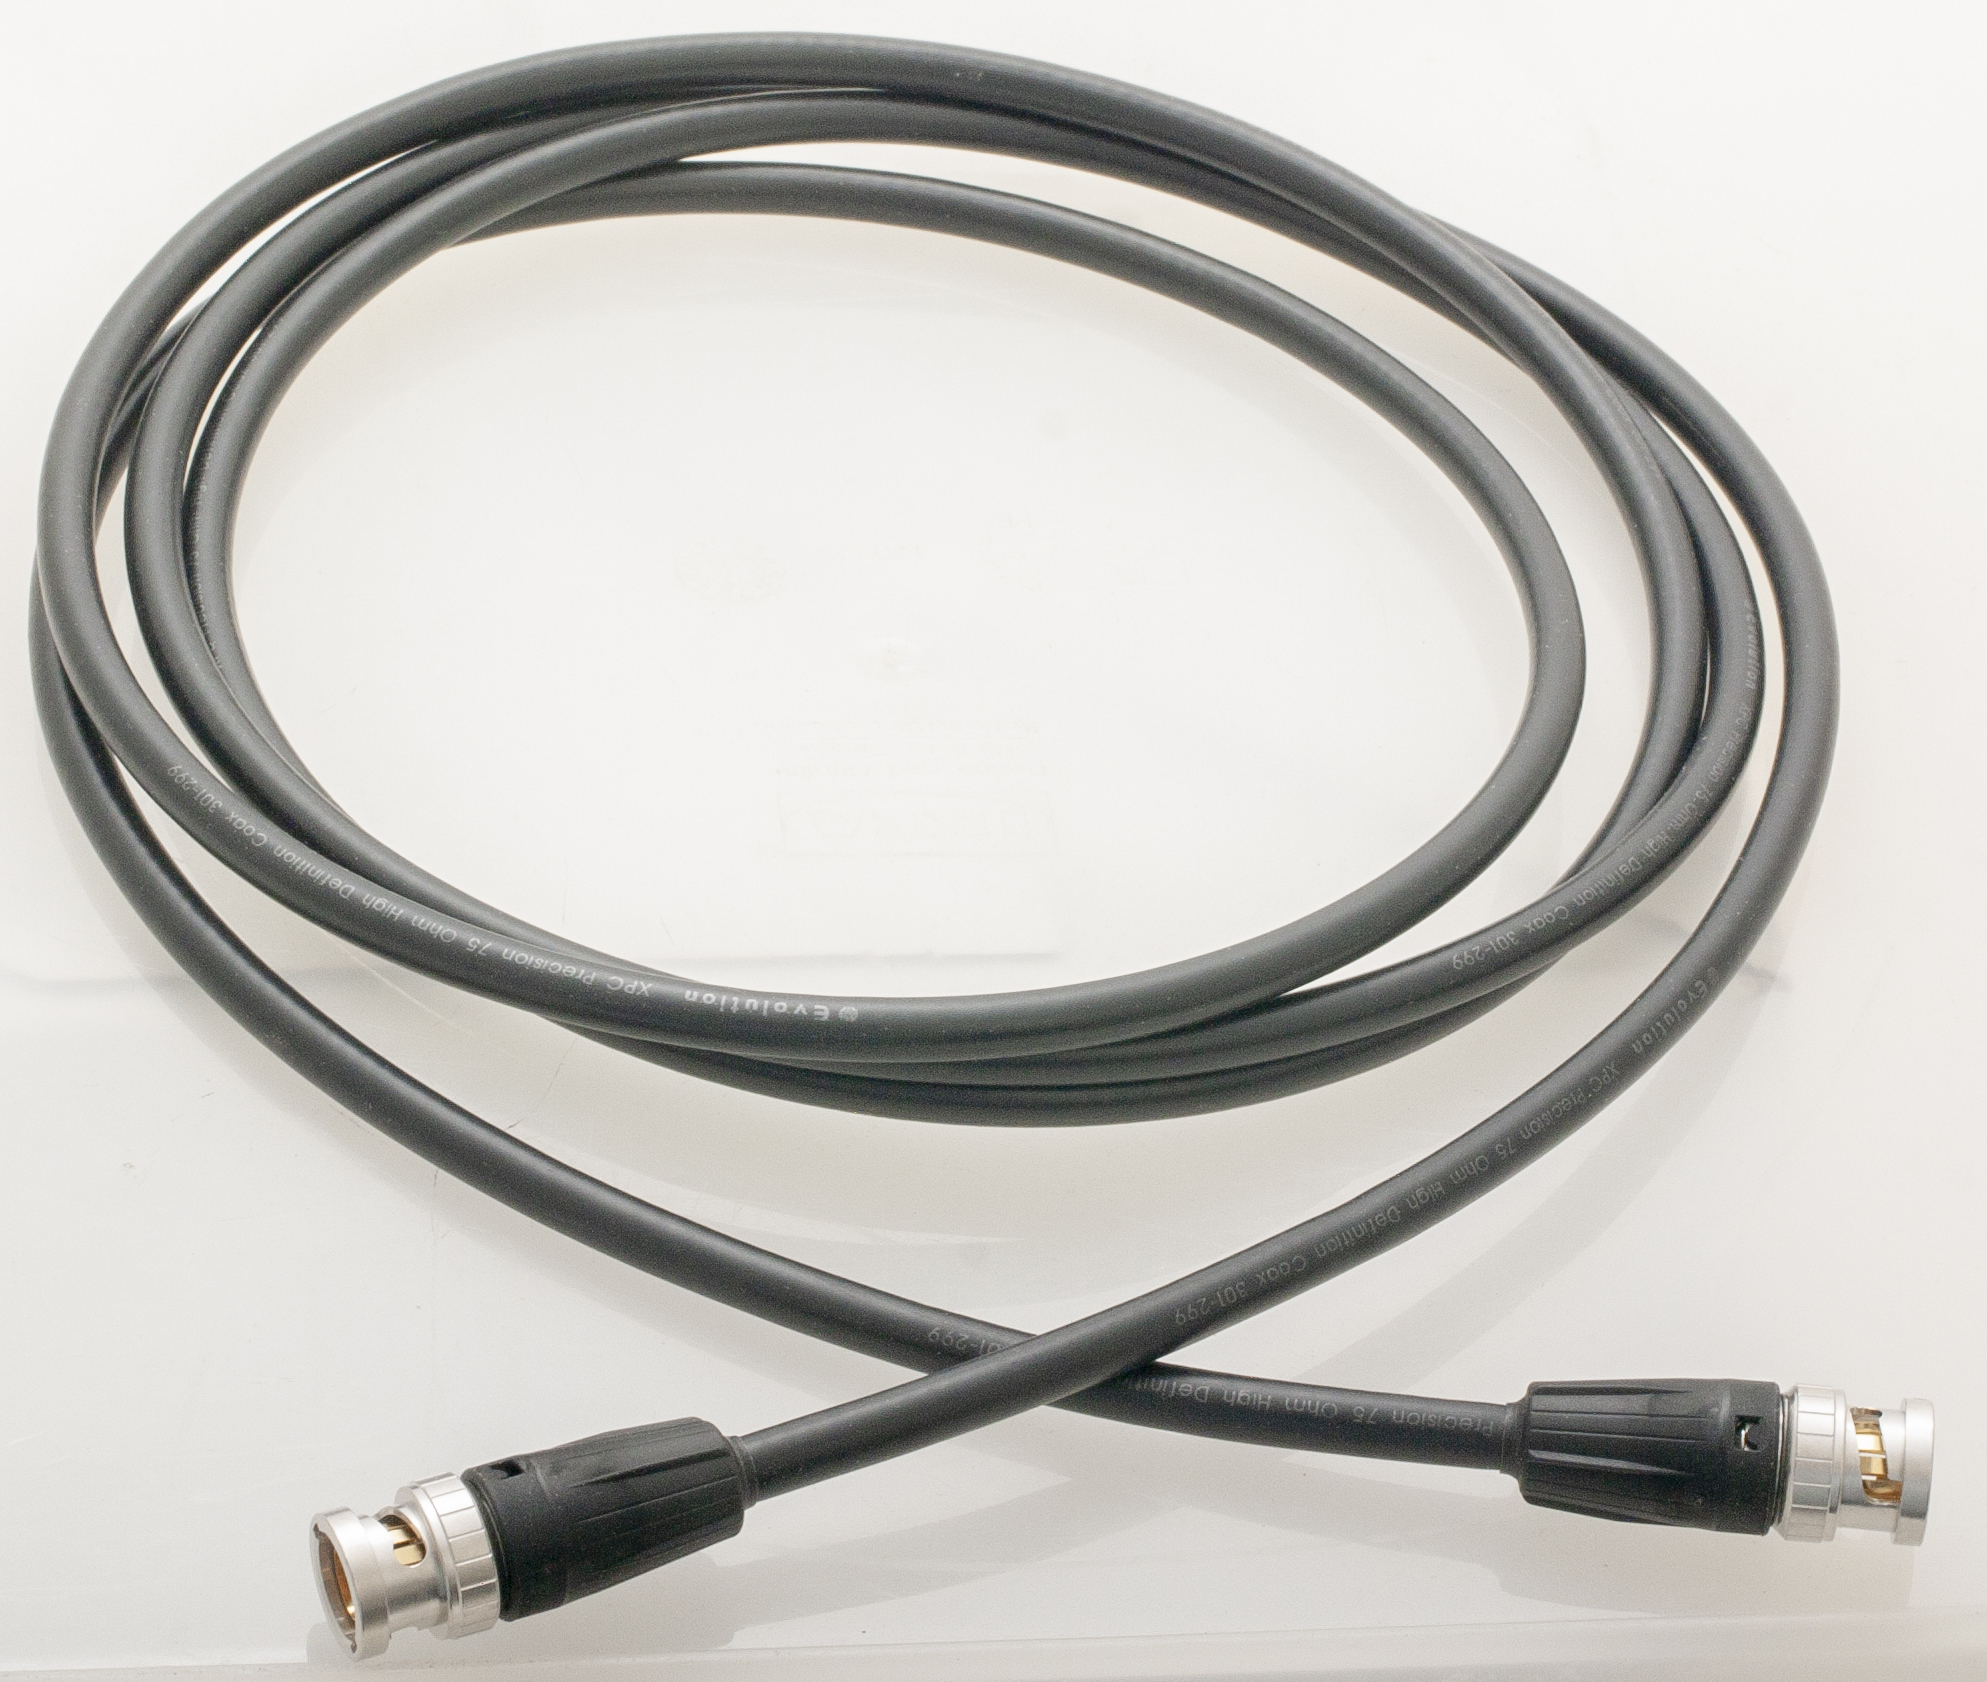 Long HD SDI Video Belden 1694f Flexible Cable Neutrik UHD BNC  Tricaster BMD 